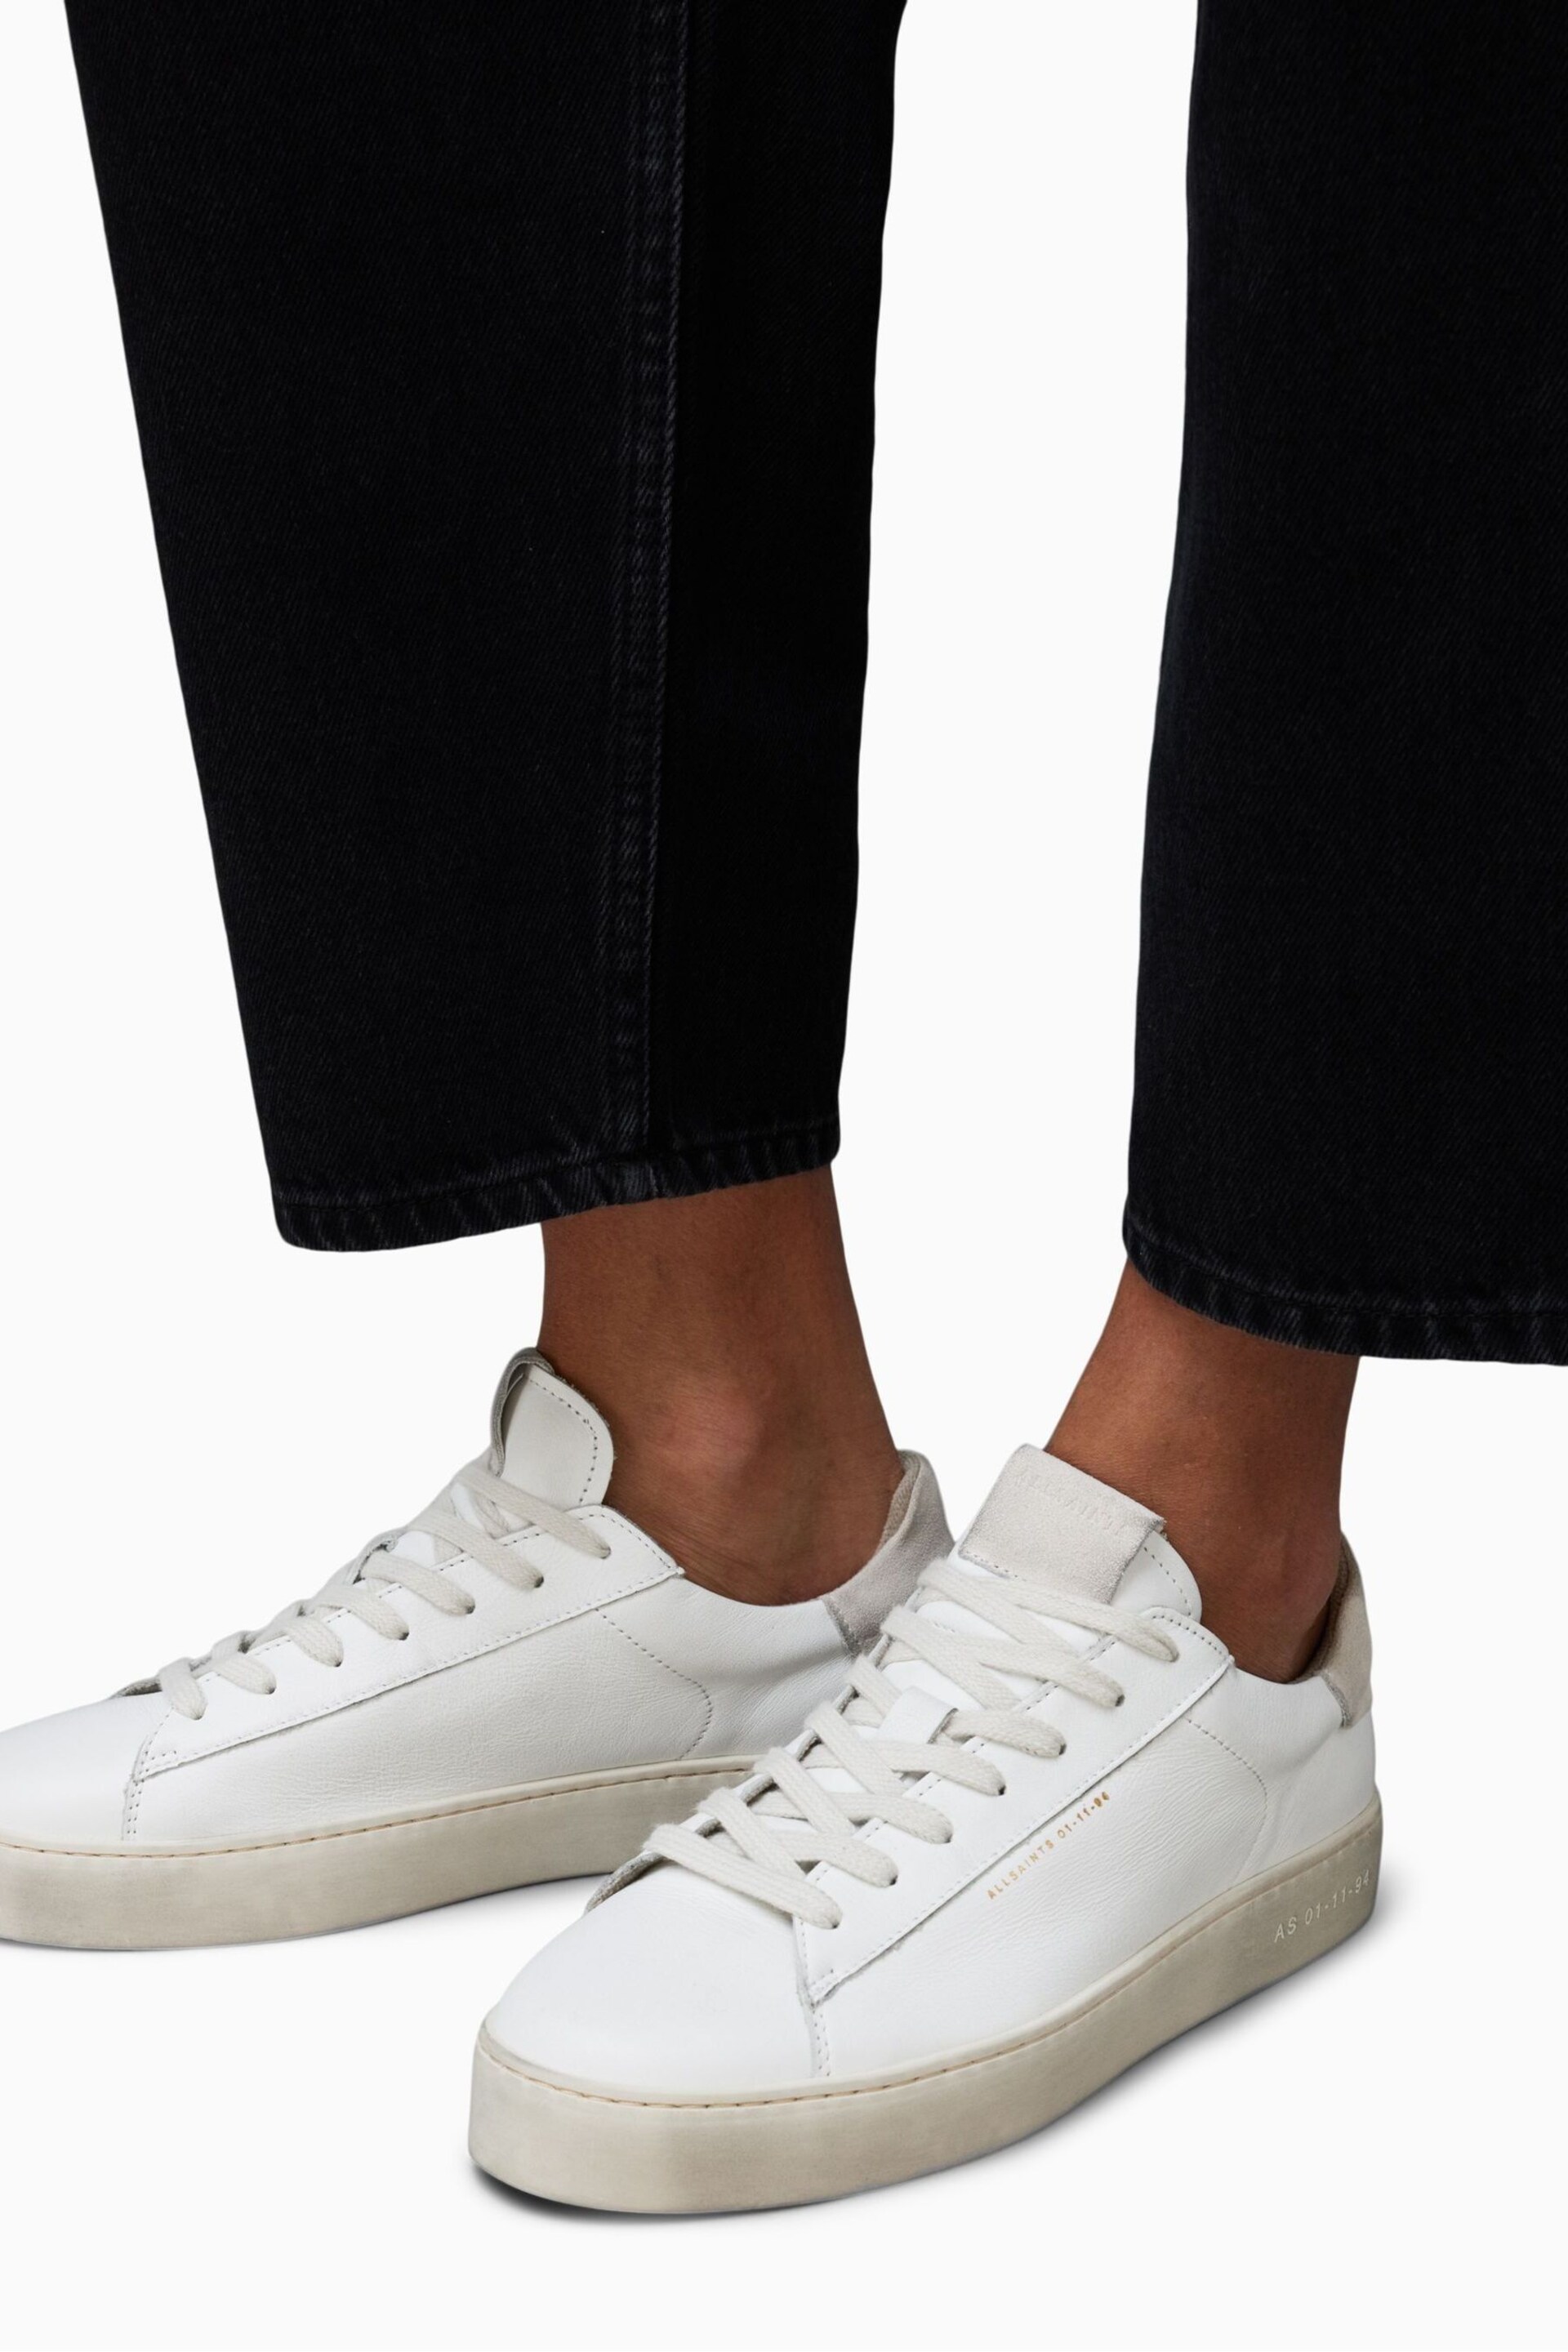 AllSaints White Shana Sneakers - Image 7 of 7